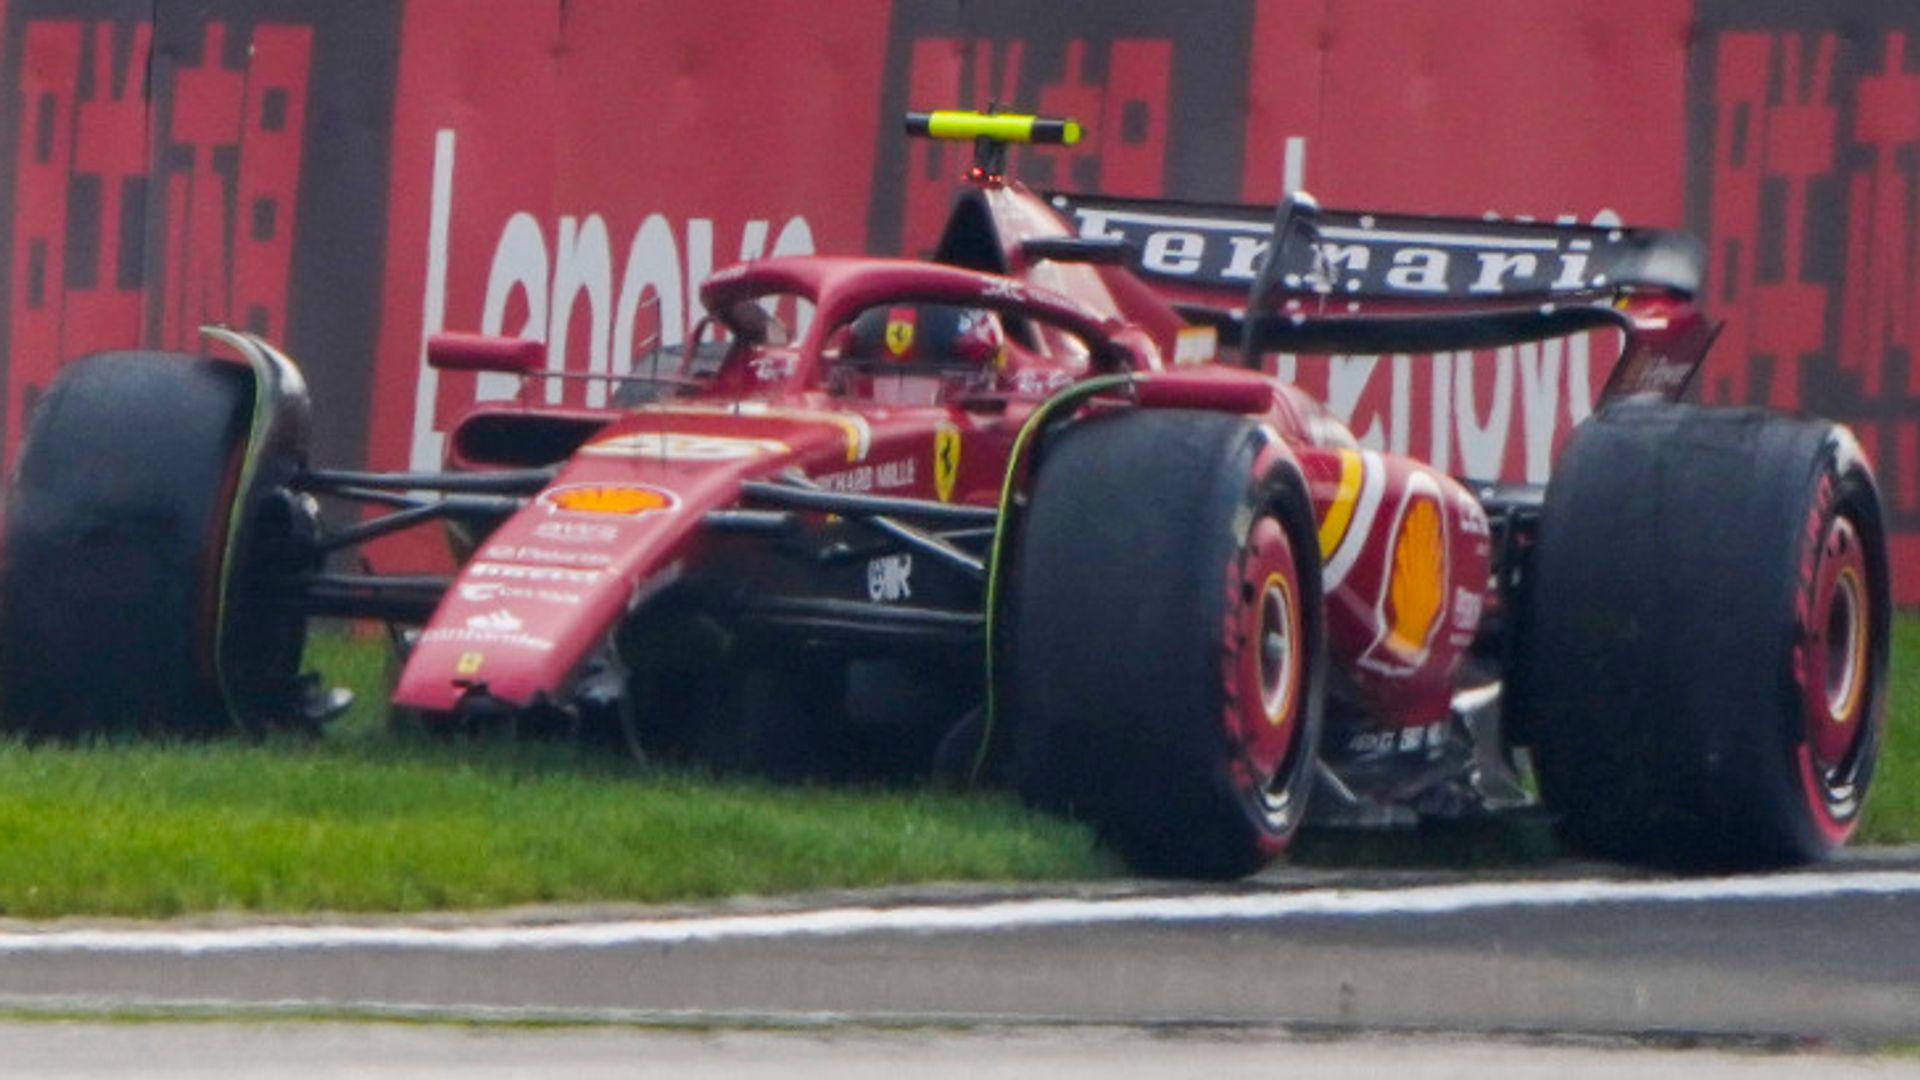 Chinese GP: Sainz makes Q3 despite crash, Hamilton out in Q1 LIVE!